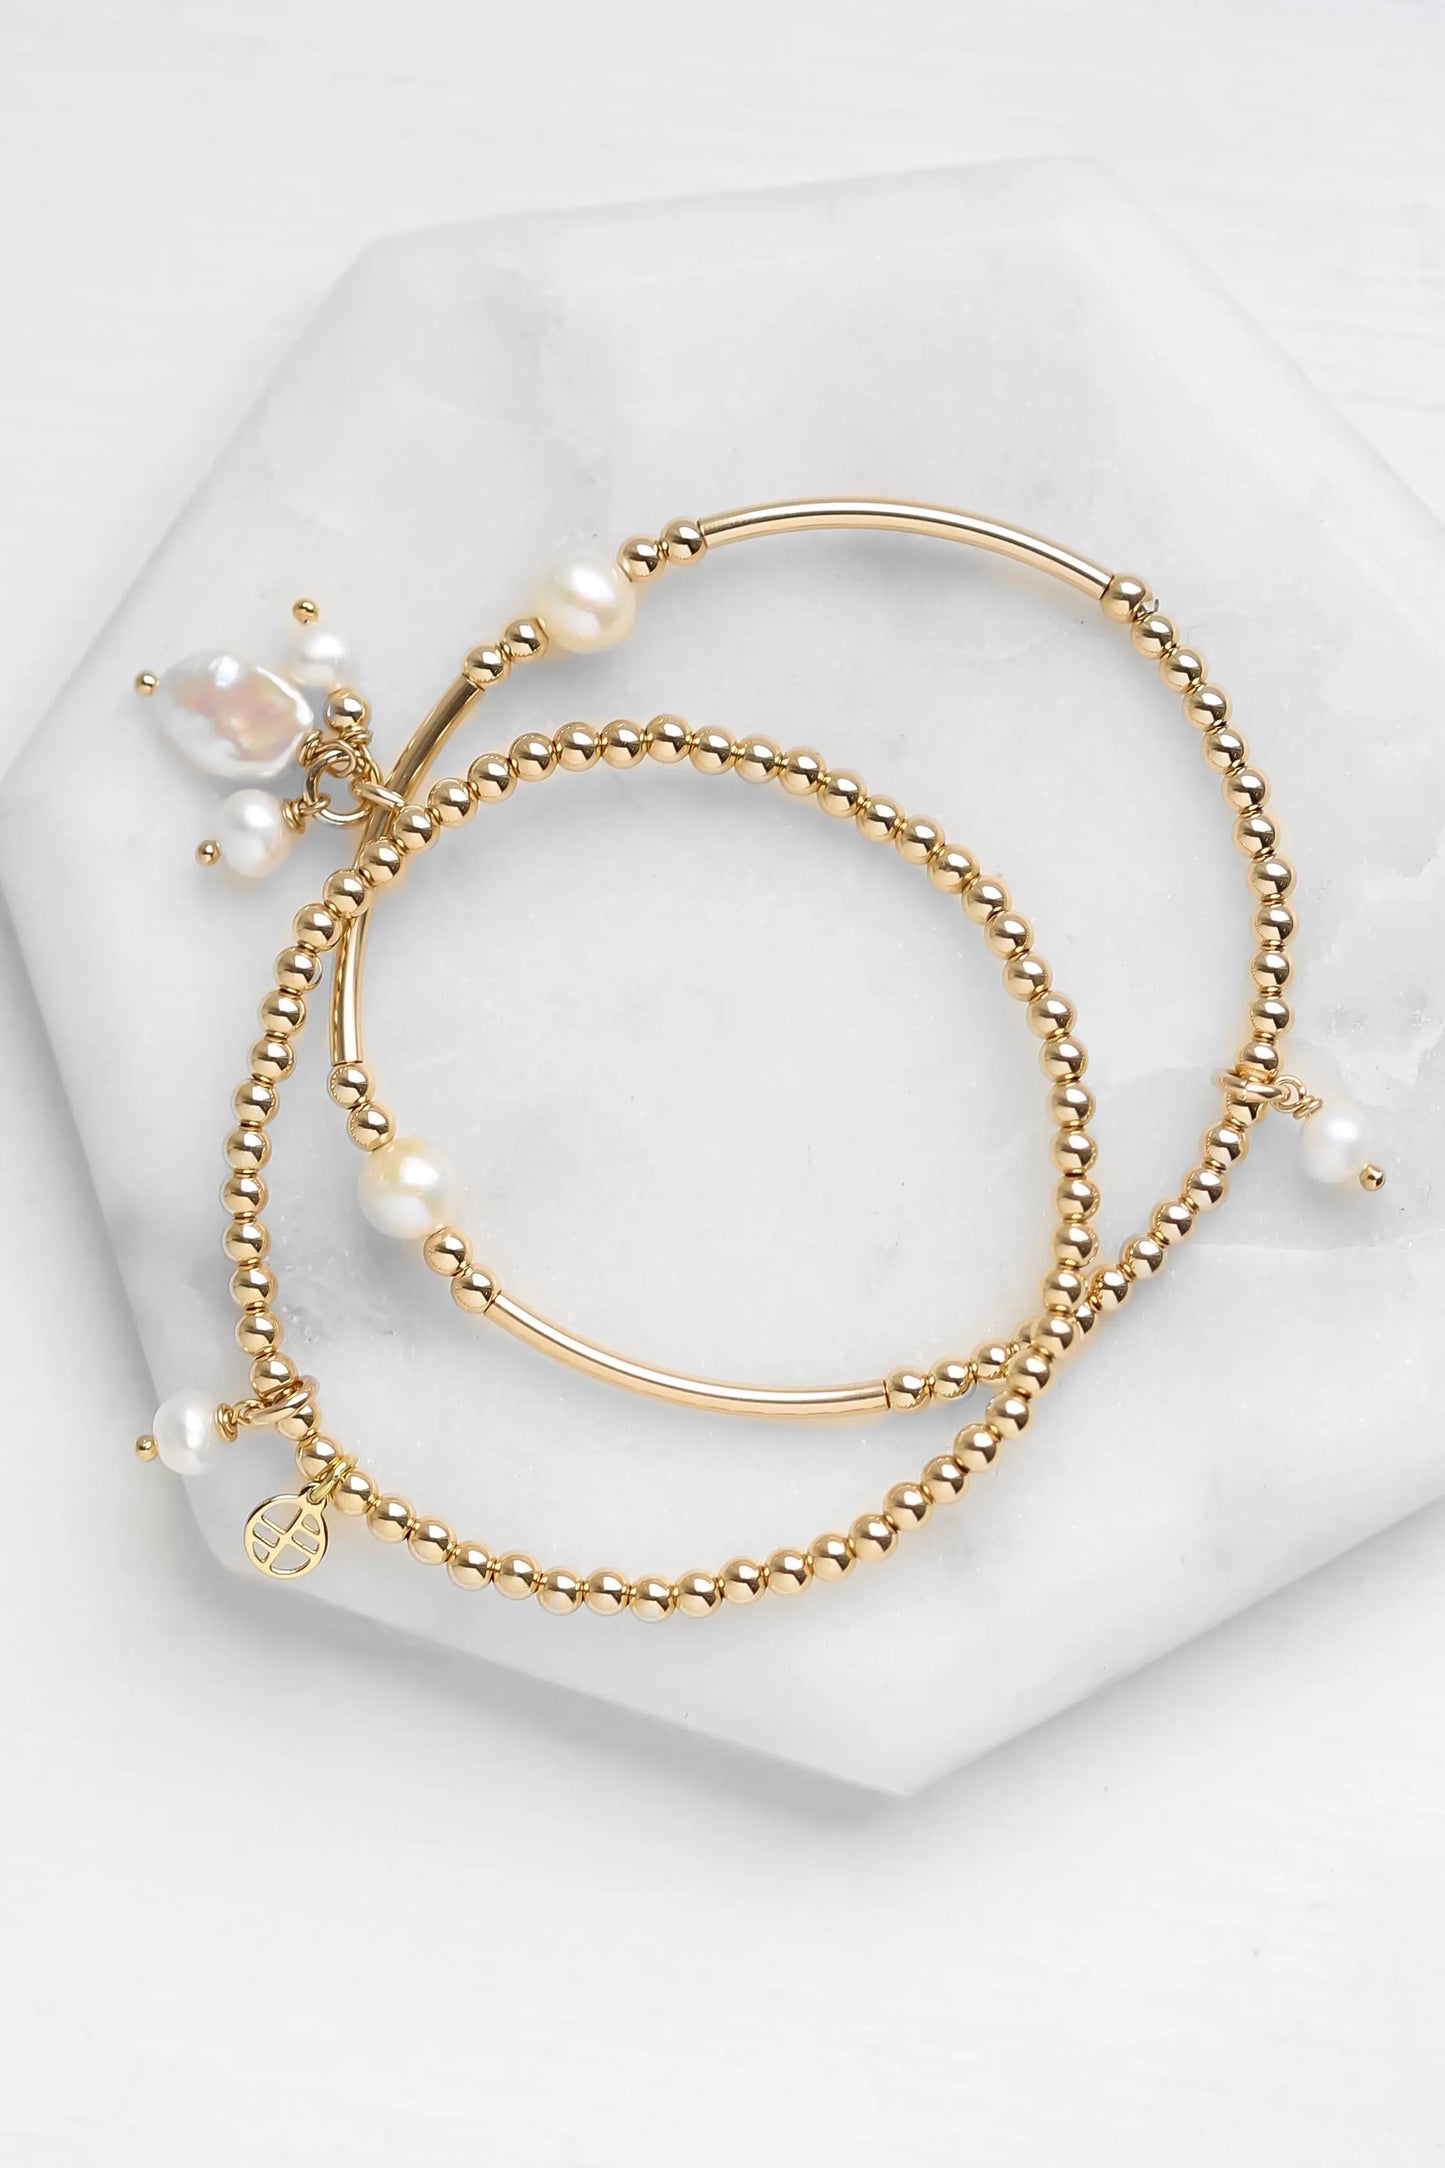  Pearl Staple Bracelet - wonder-staple-pearl-flatlay.jpg